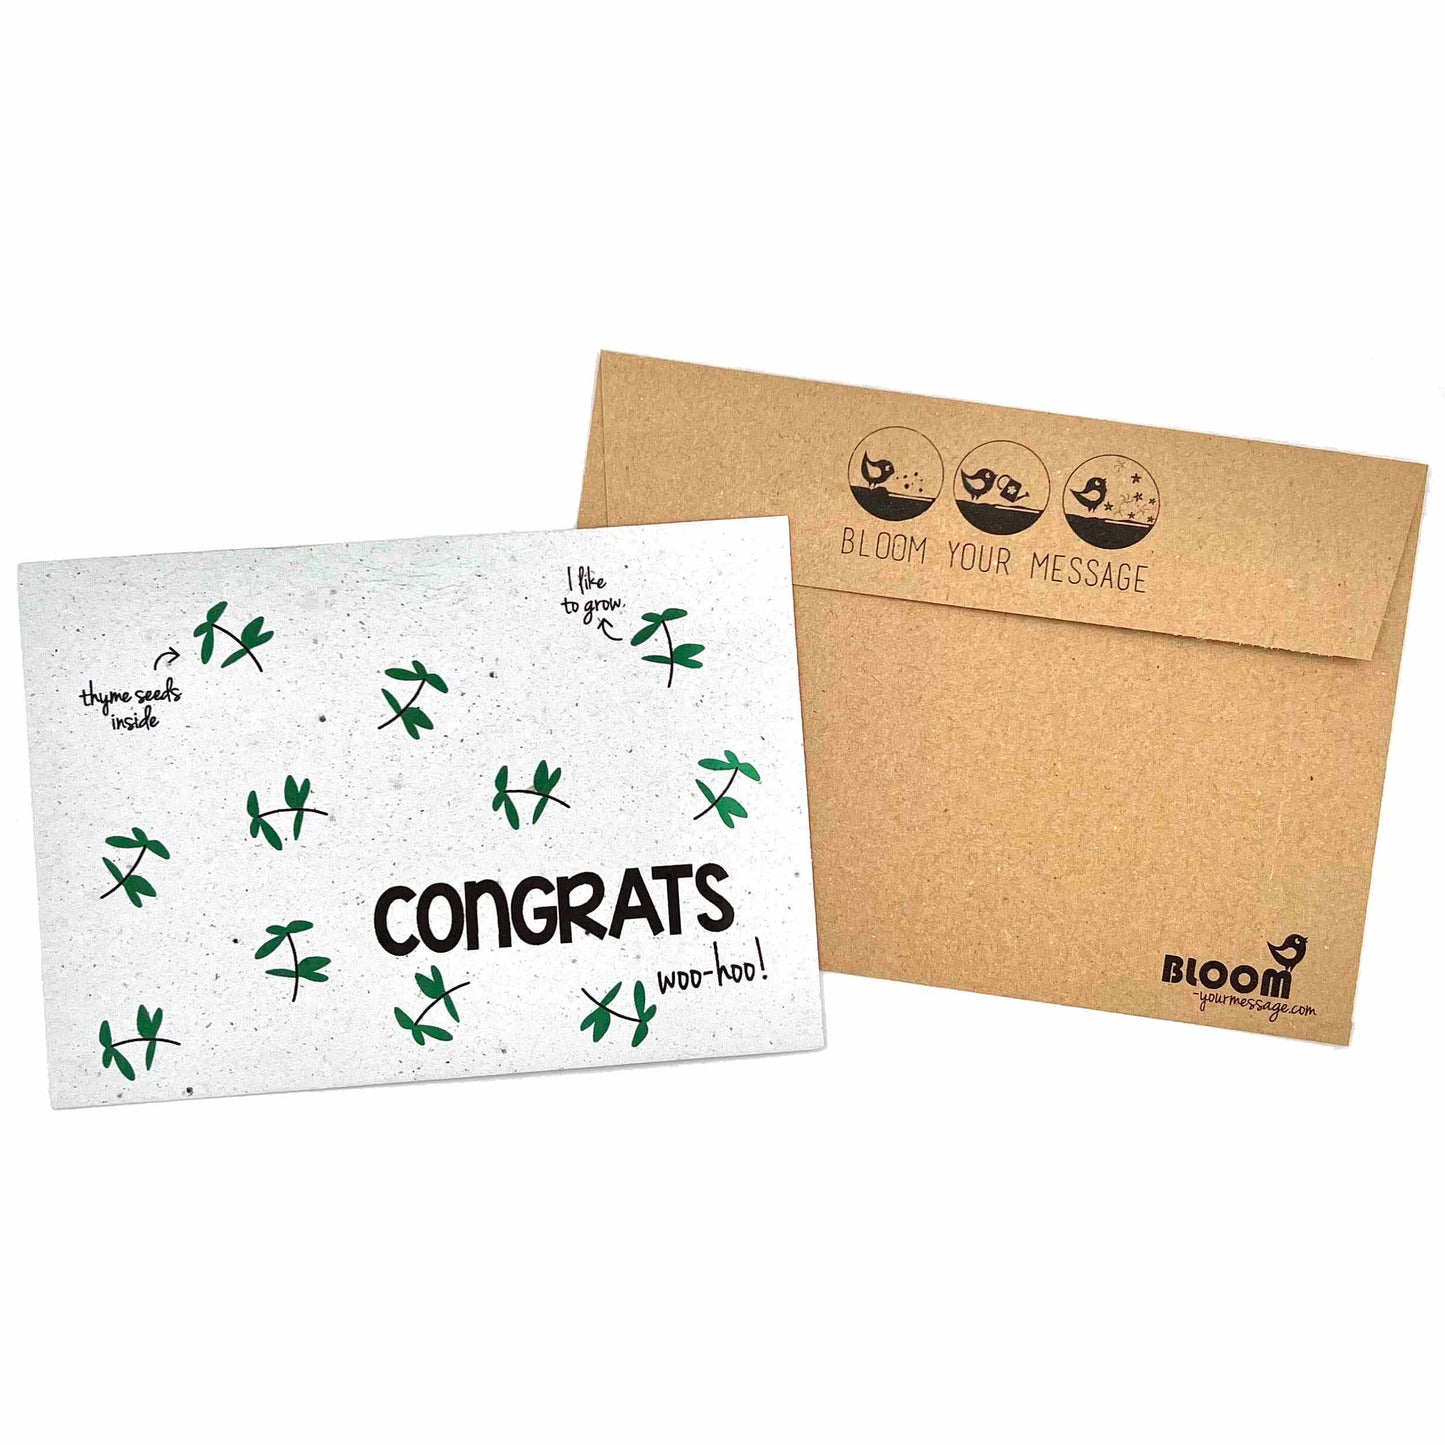 BLOOM YOUR MESSAGE grüne Kräuterkarte "Congrats woo-hoo!" mit Thymian-Saatgut | 100% recyceltes Material